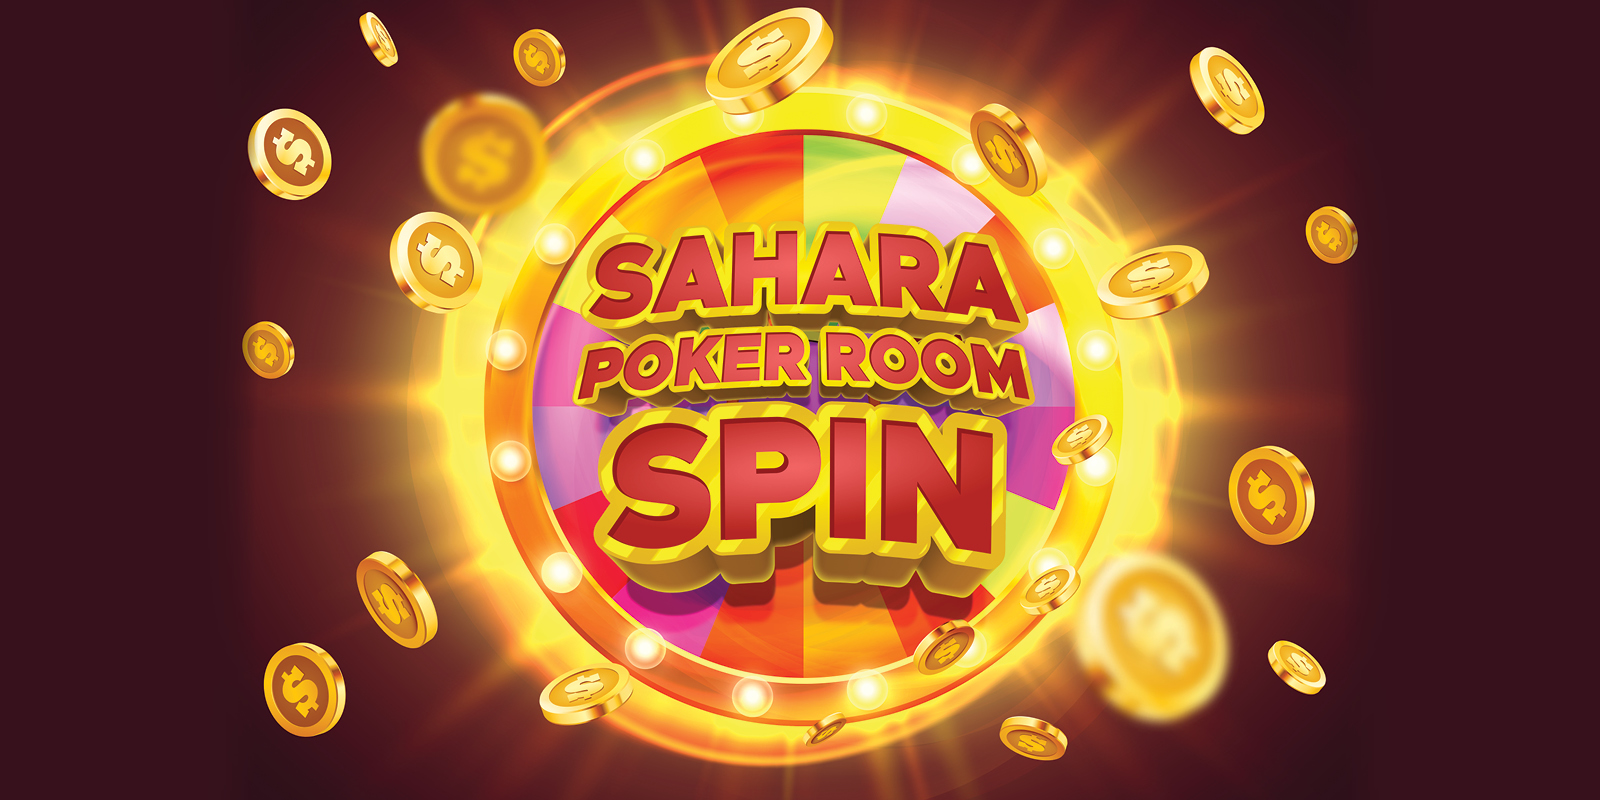 SAHARA Poker Room Spin